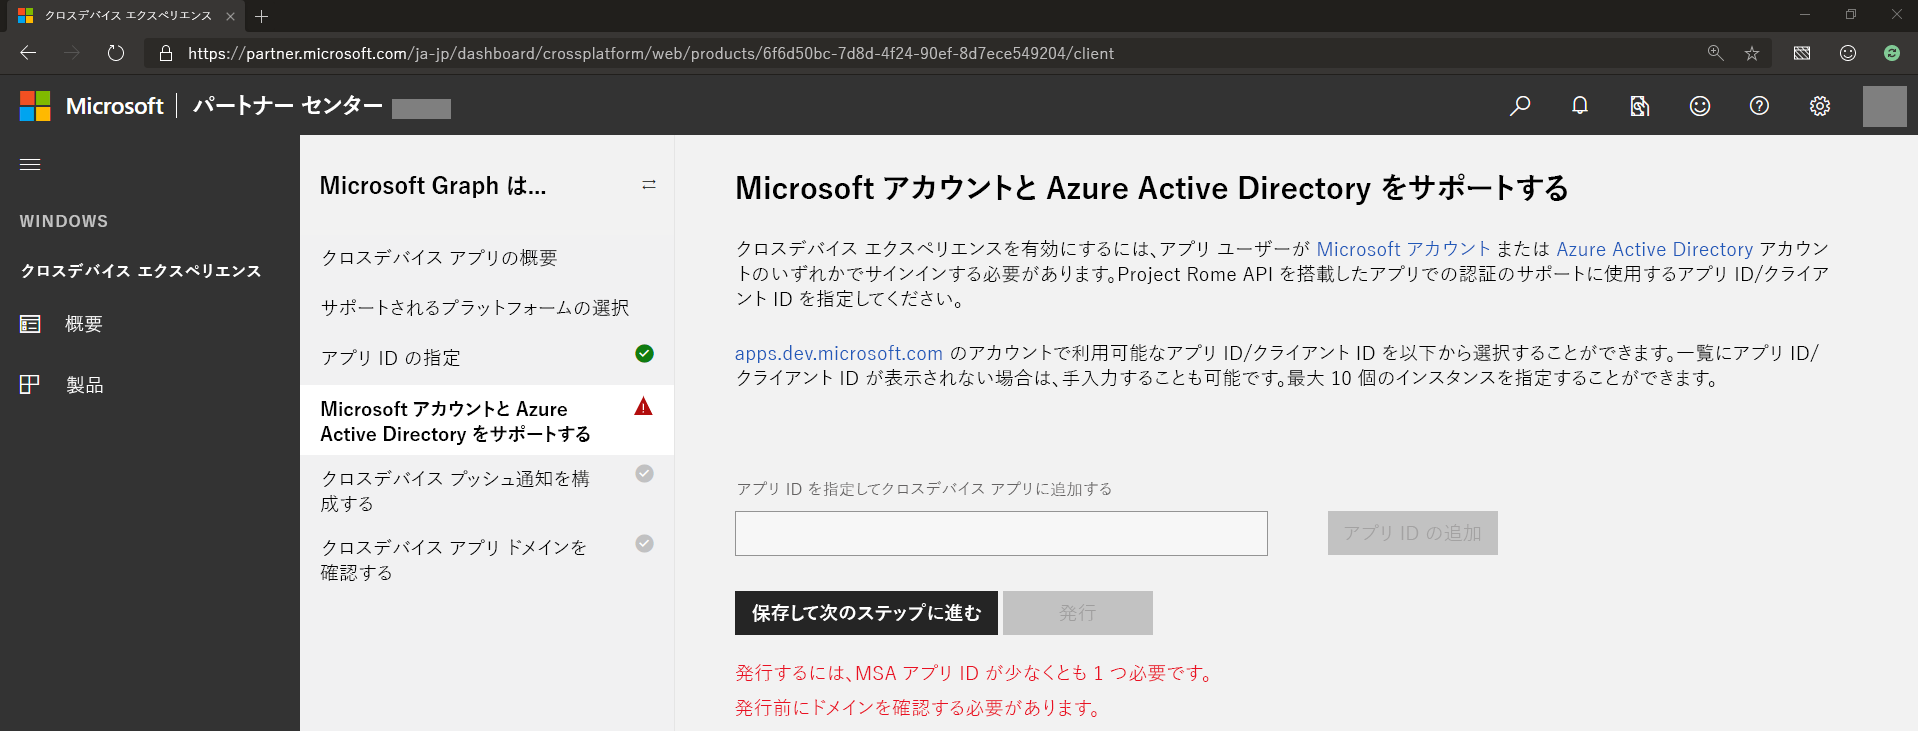 MSA とMicrosoft Entra IDの Azure アプリ登録クライアント ID を指定する